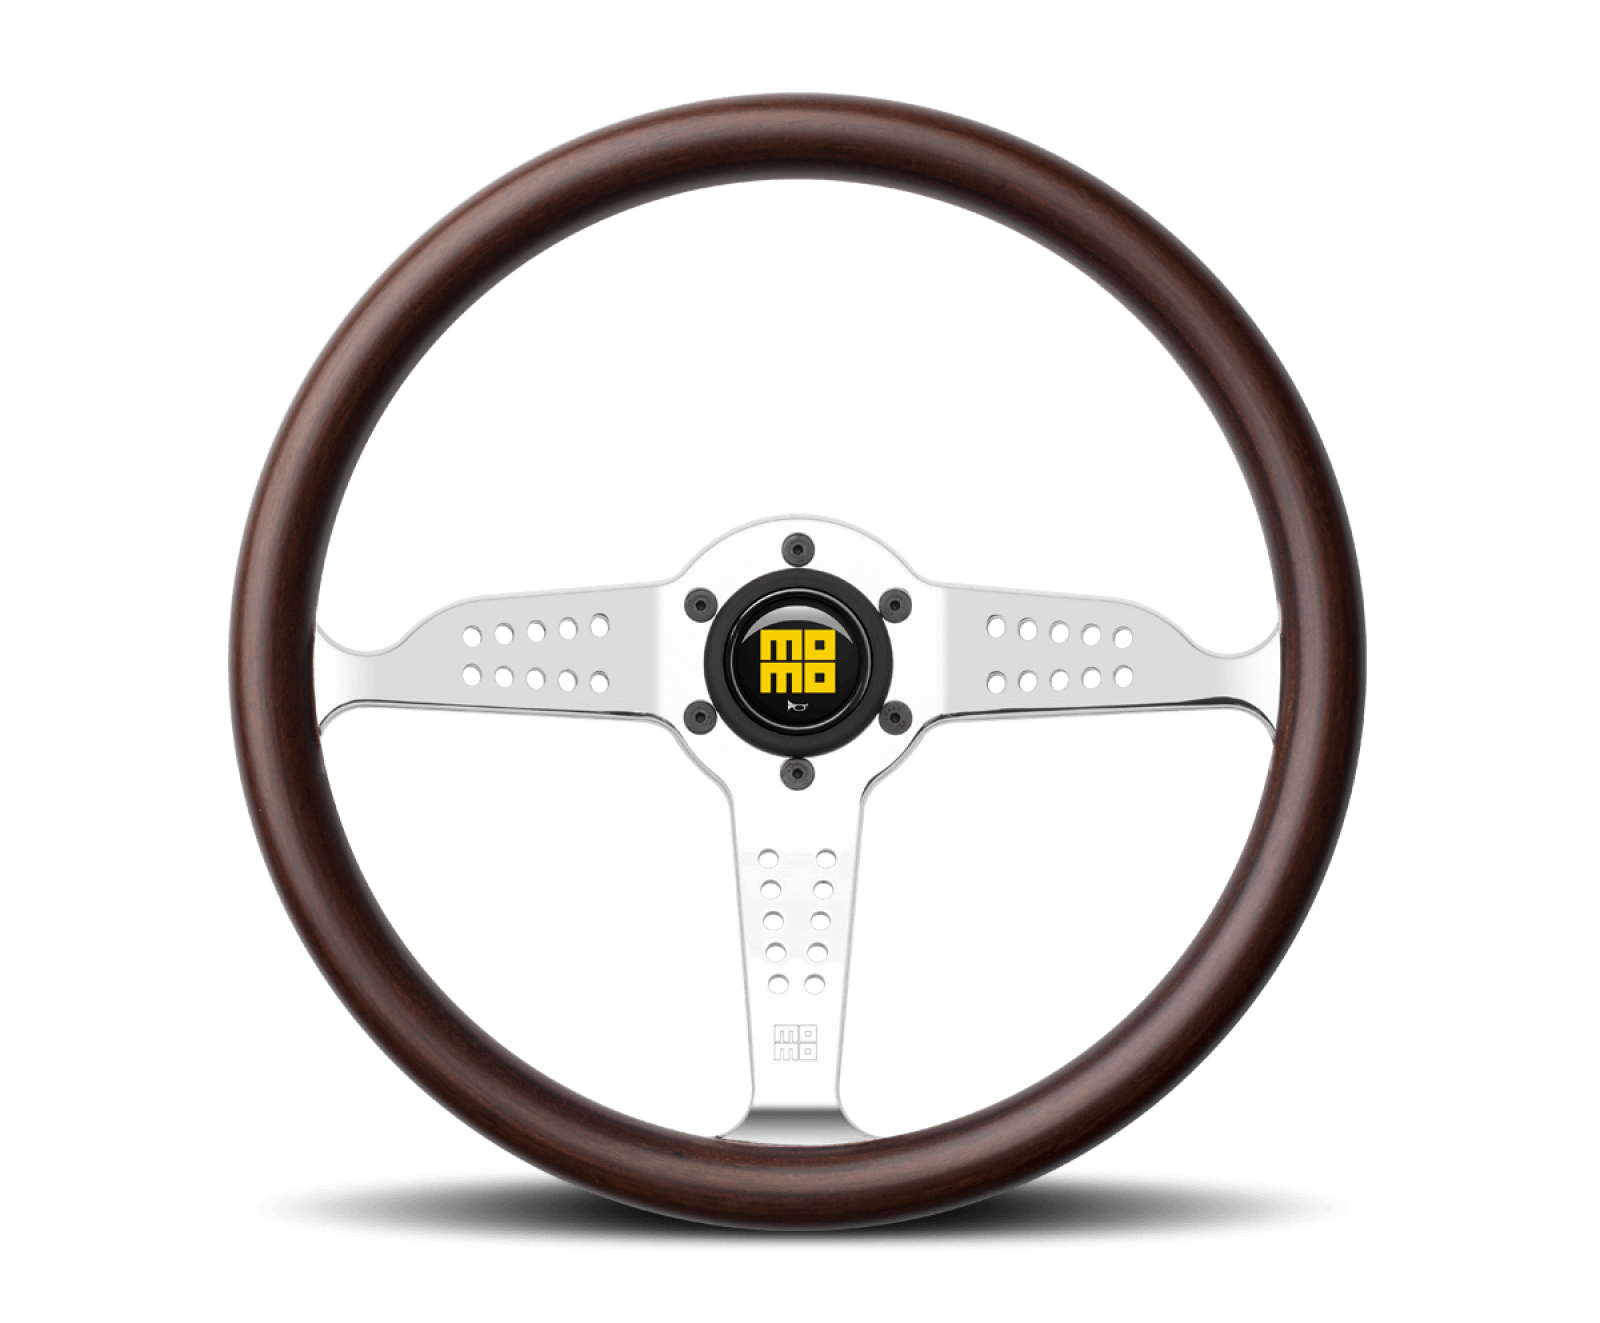 MOMO Super Grand Prix Steering Wheel - $310.50